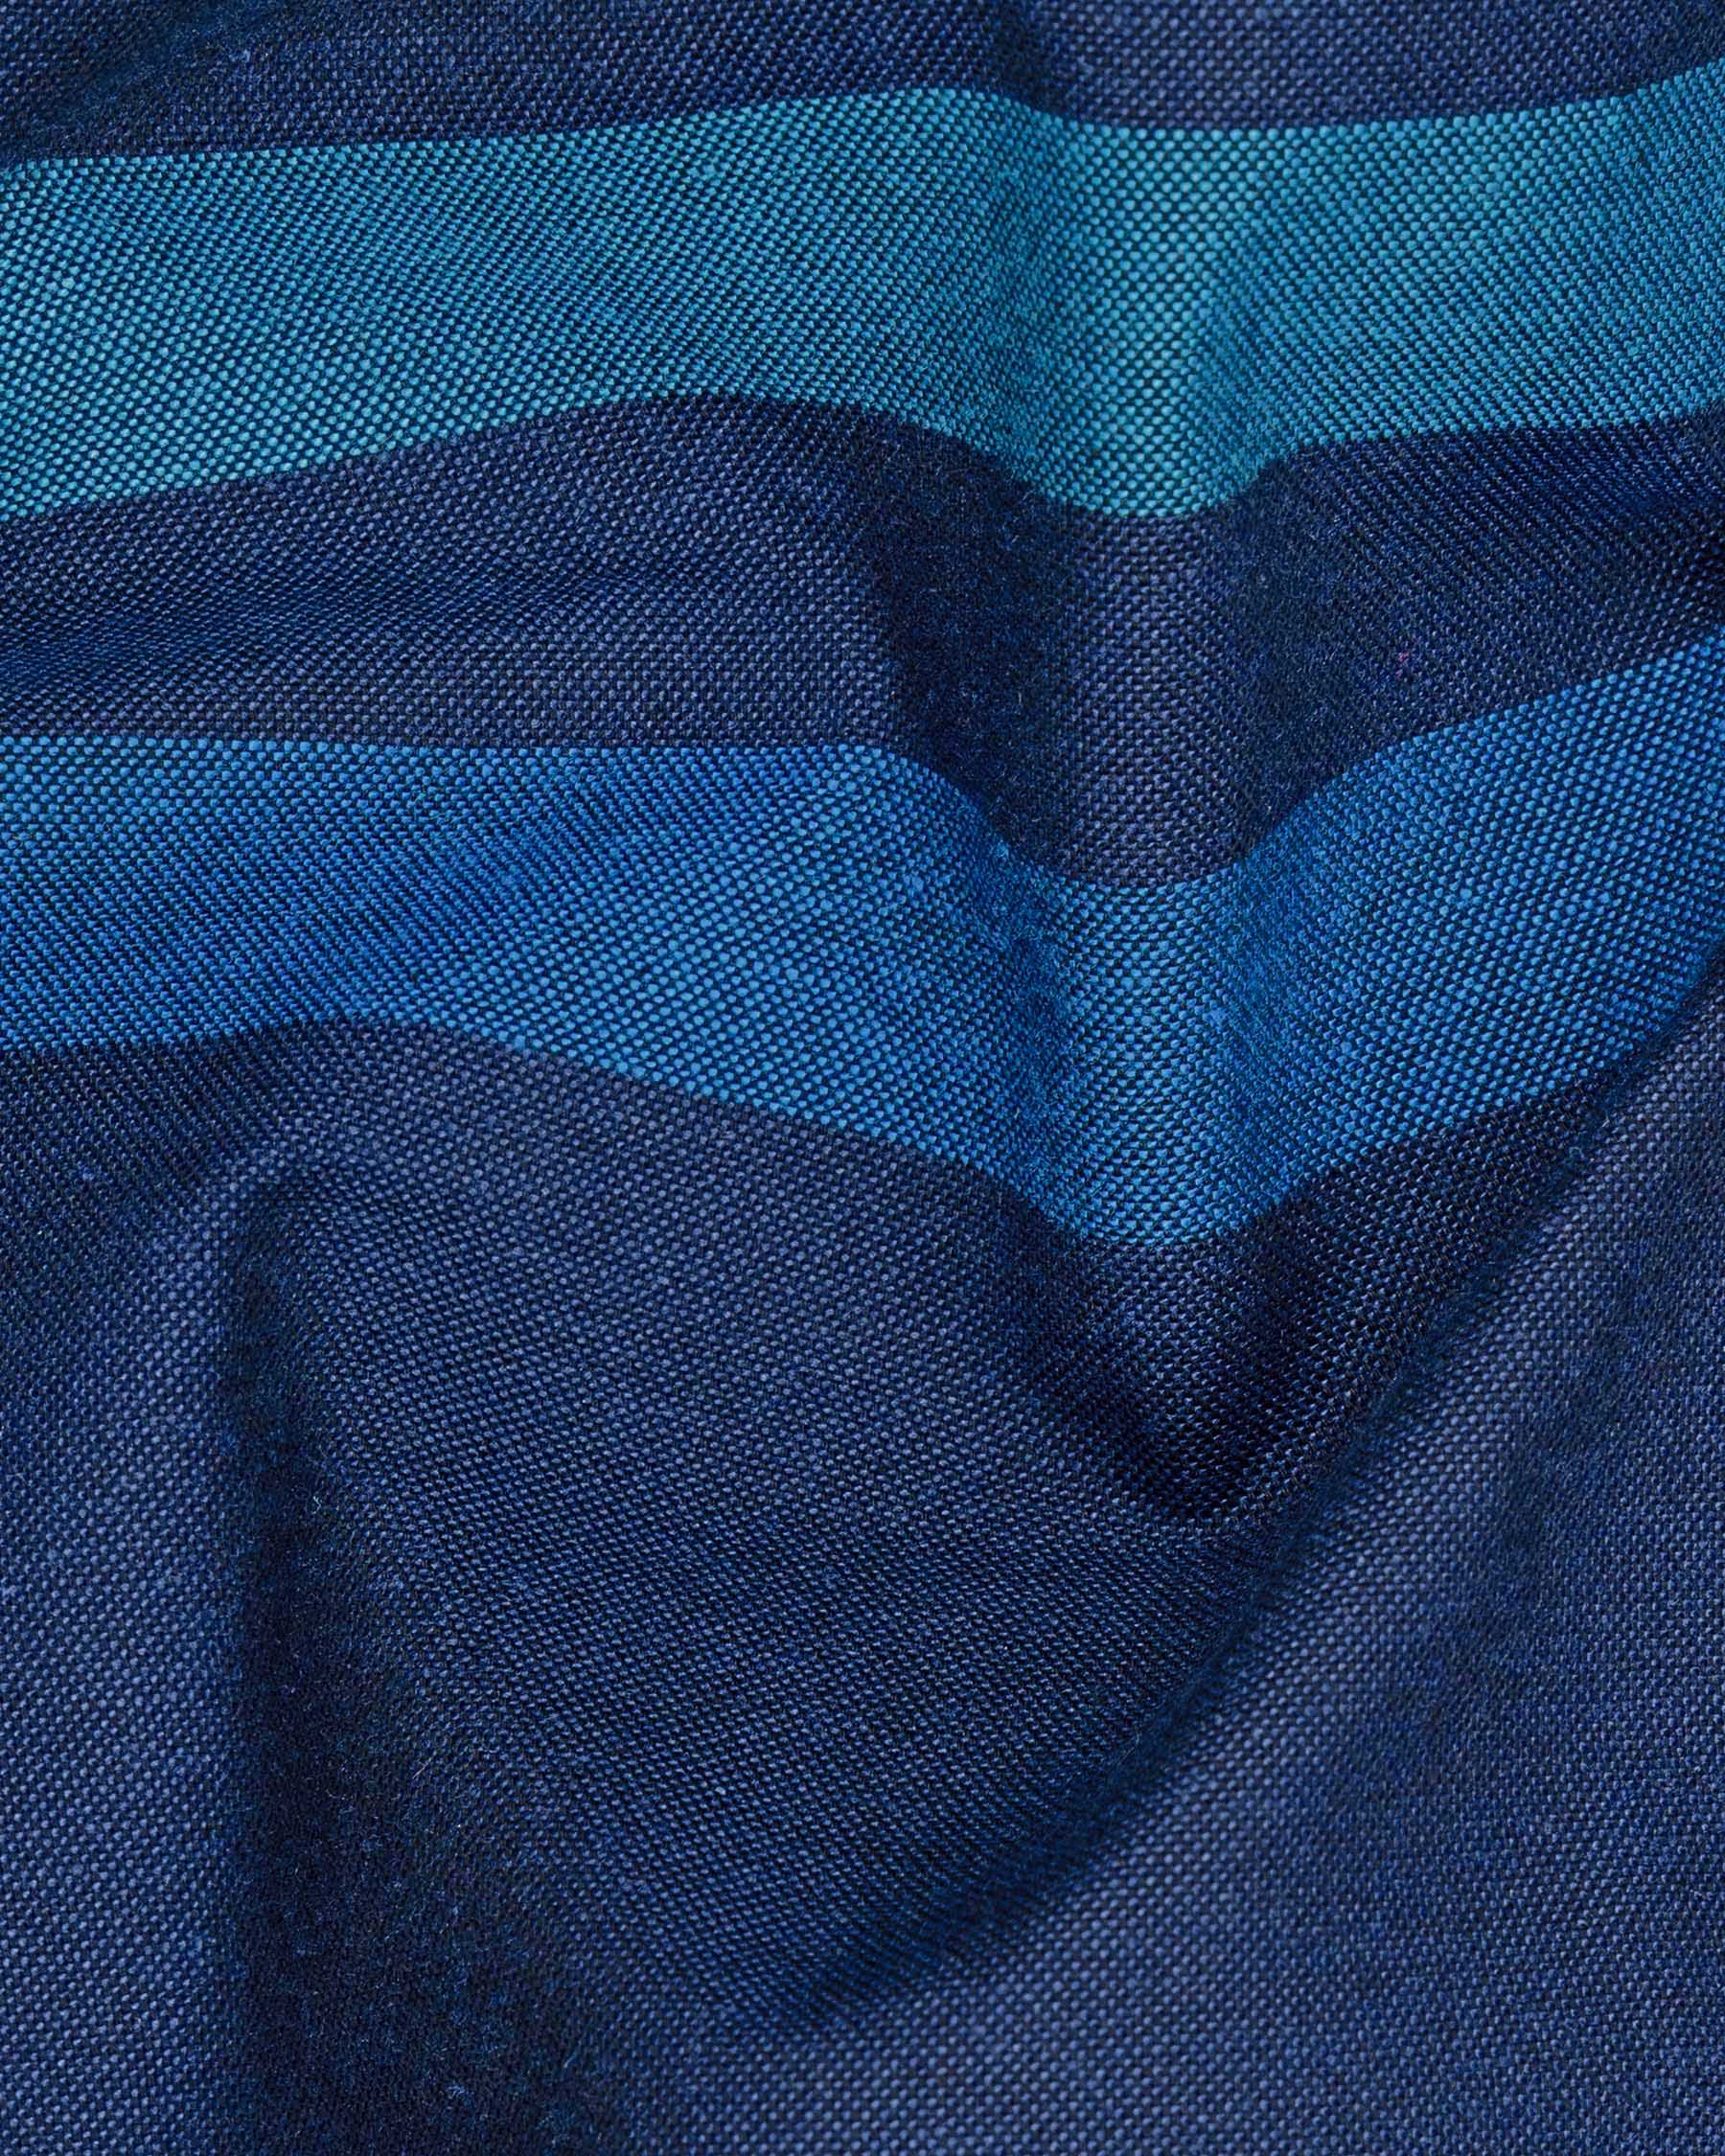 Cloud Burst and Chambray Blue Striped Royal Oxford Shirt 6833-38,6833-38,6833-39,6833-39,6833-40,6833-40,6833-42,6833-42,6833-44,6833-44,6833-46,6833-46,6833-48,6833-48,6833-50,6833-50,6833-52,6833-52